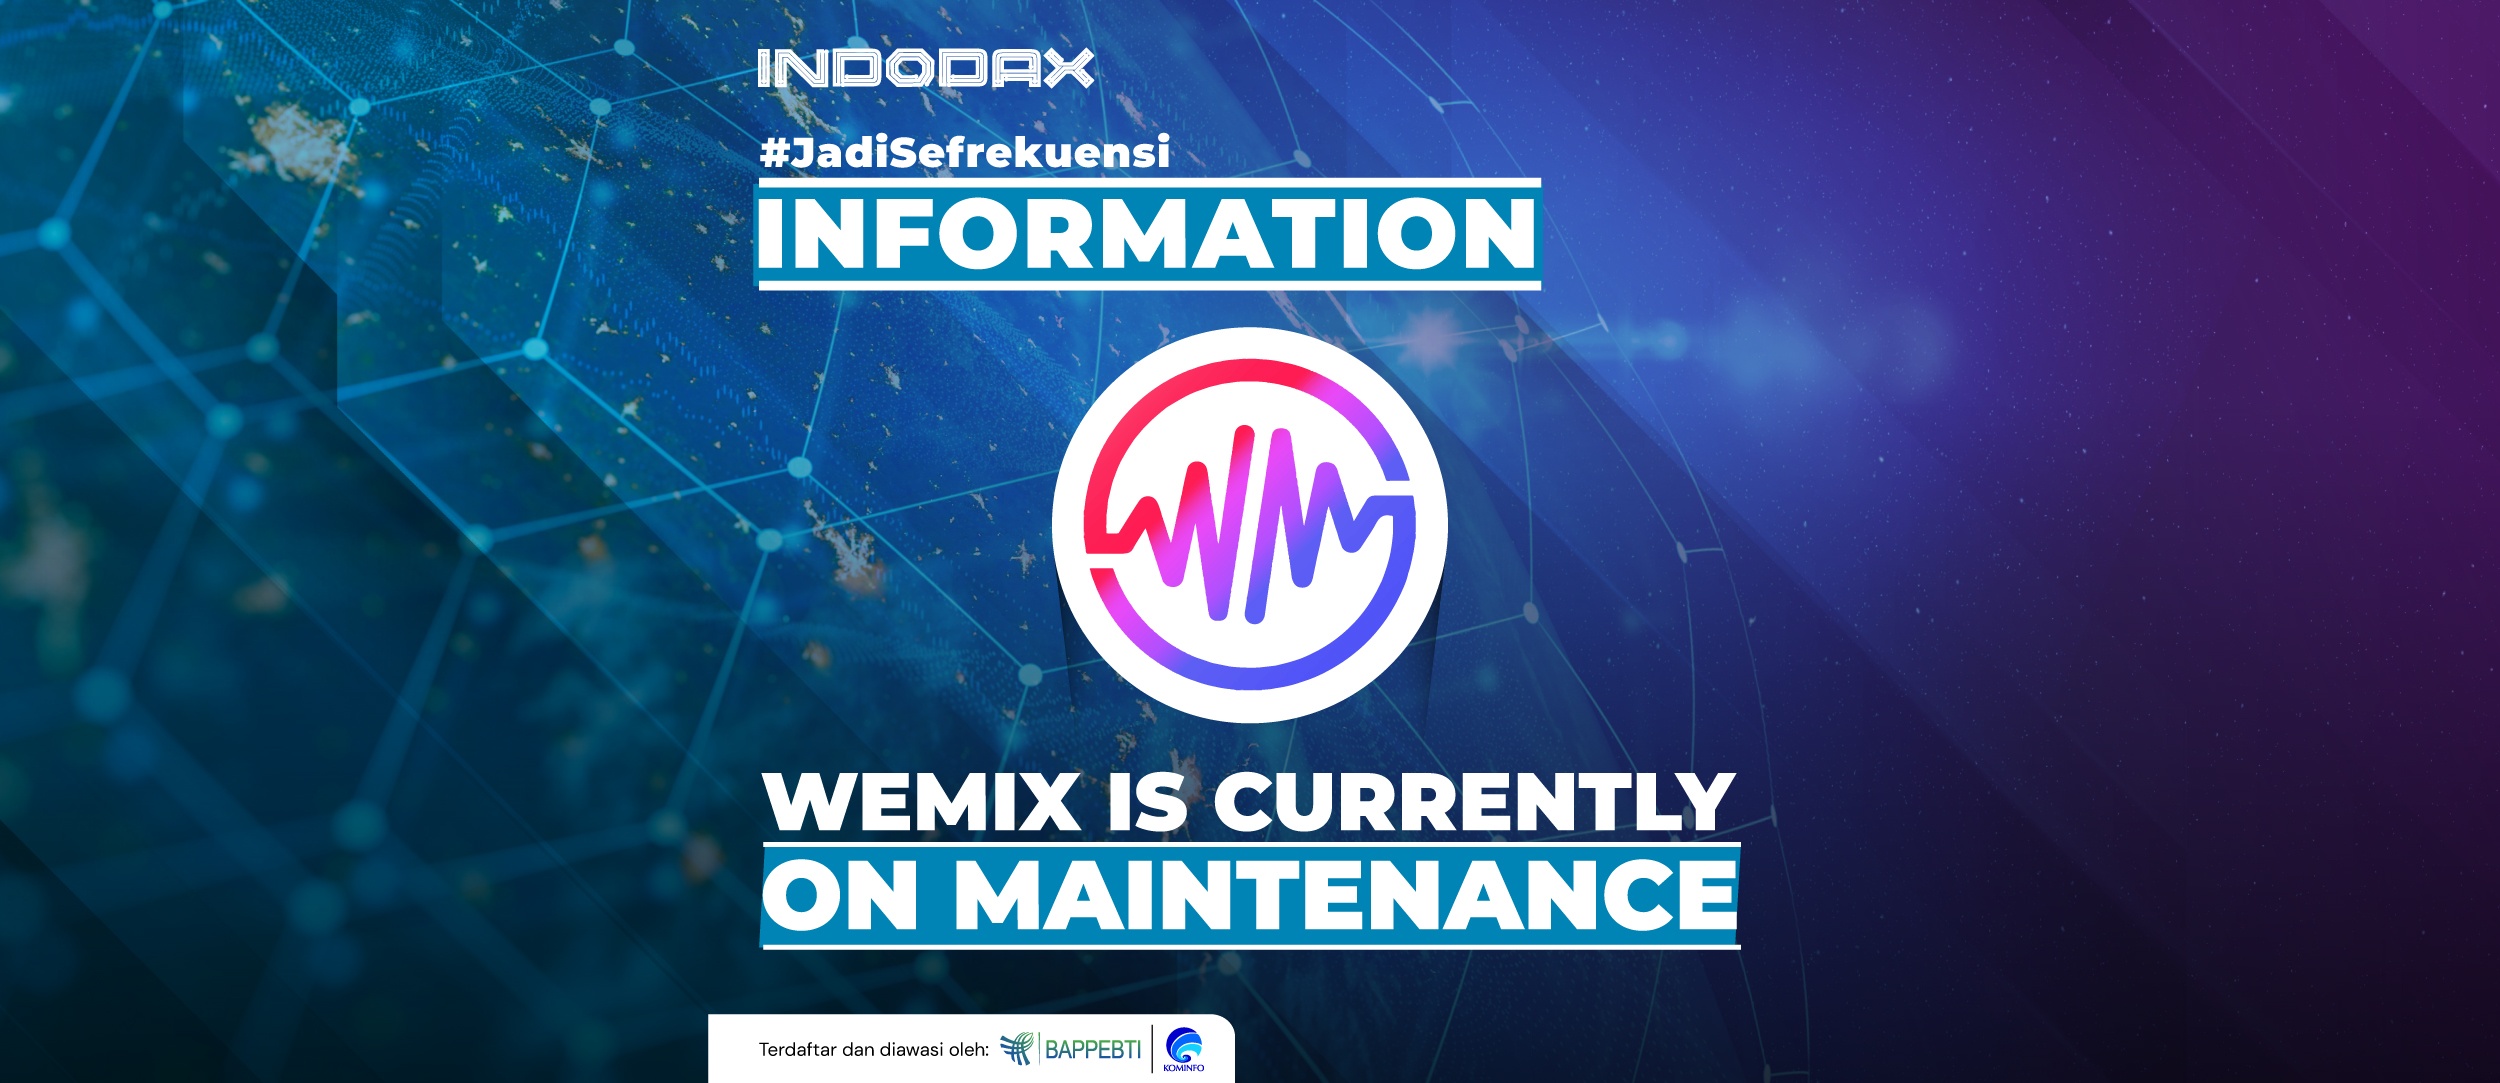 Sehubungan dengan akan adanya migrasi WEMIX yang akan mengganti jaringan dari versi lama (Klaytn/KIP7) menjadi Mainnet. INDODAX akan melakukan maintenance untuk deposit & withdraw WEMIX mulai Senin, 6 Februari 2023 pukul 10.00 WIB sampai dengan Rabu, 8 Februari 2023 pukul 14.00 WIB.